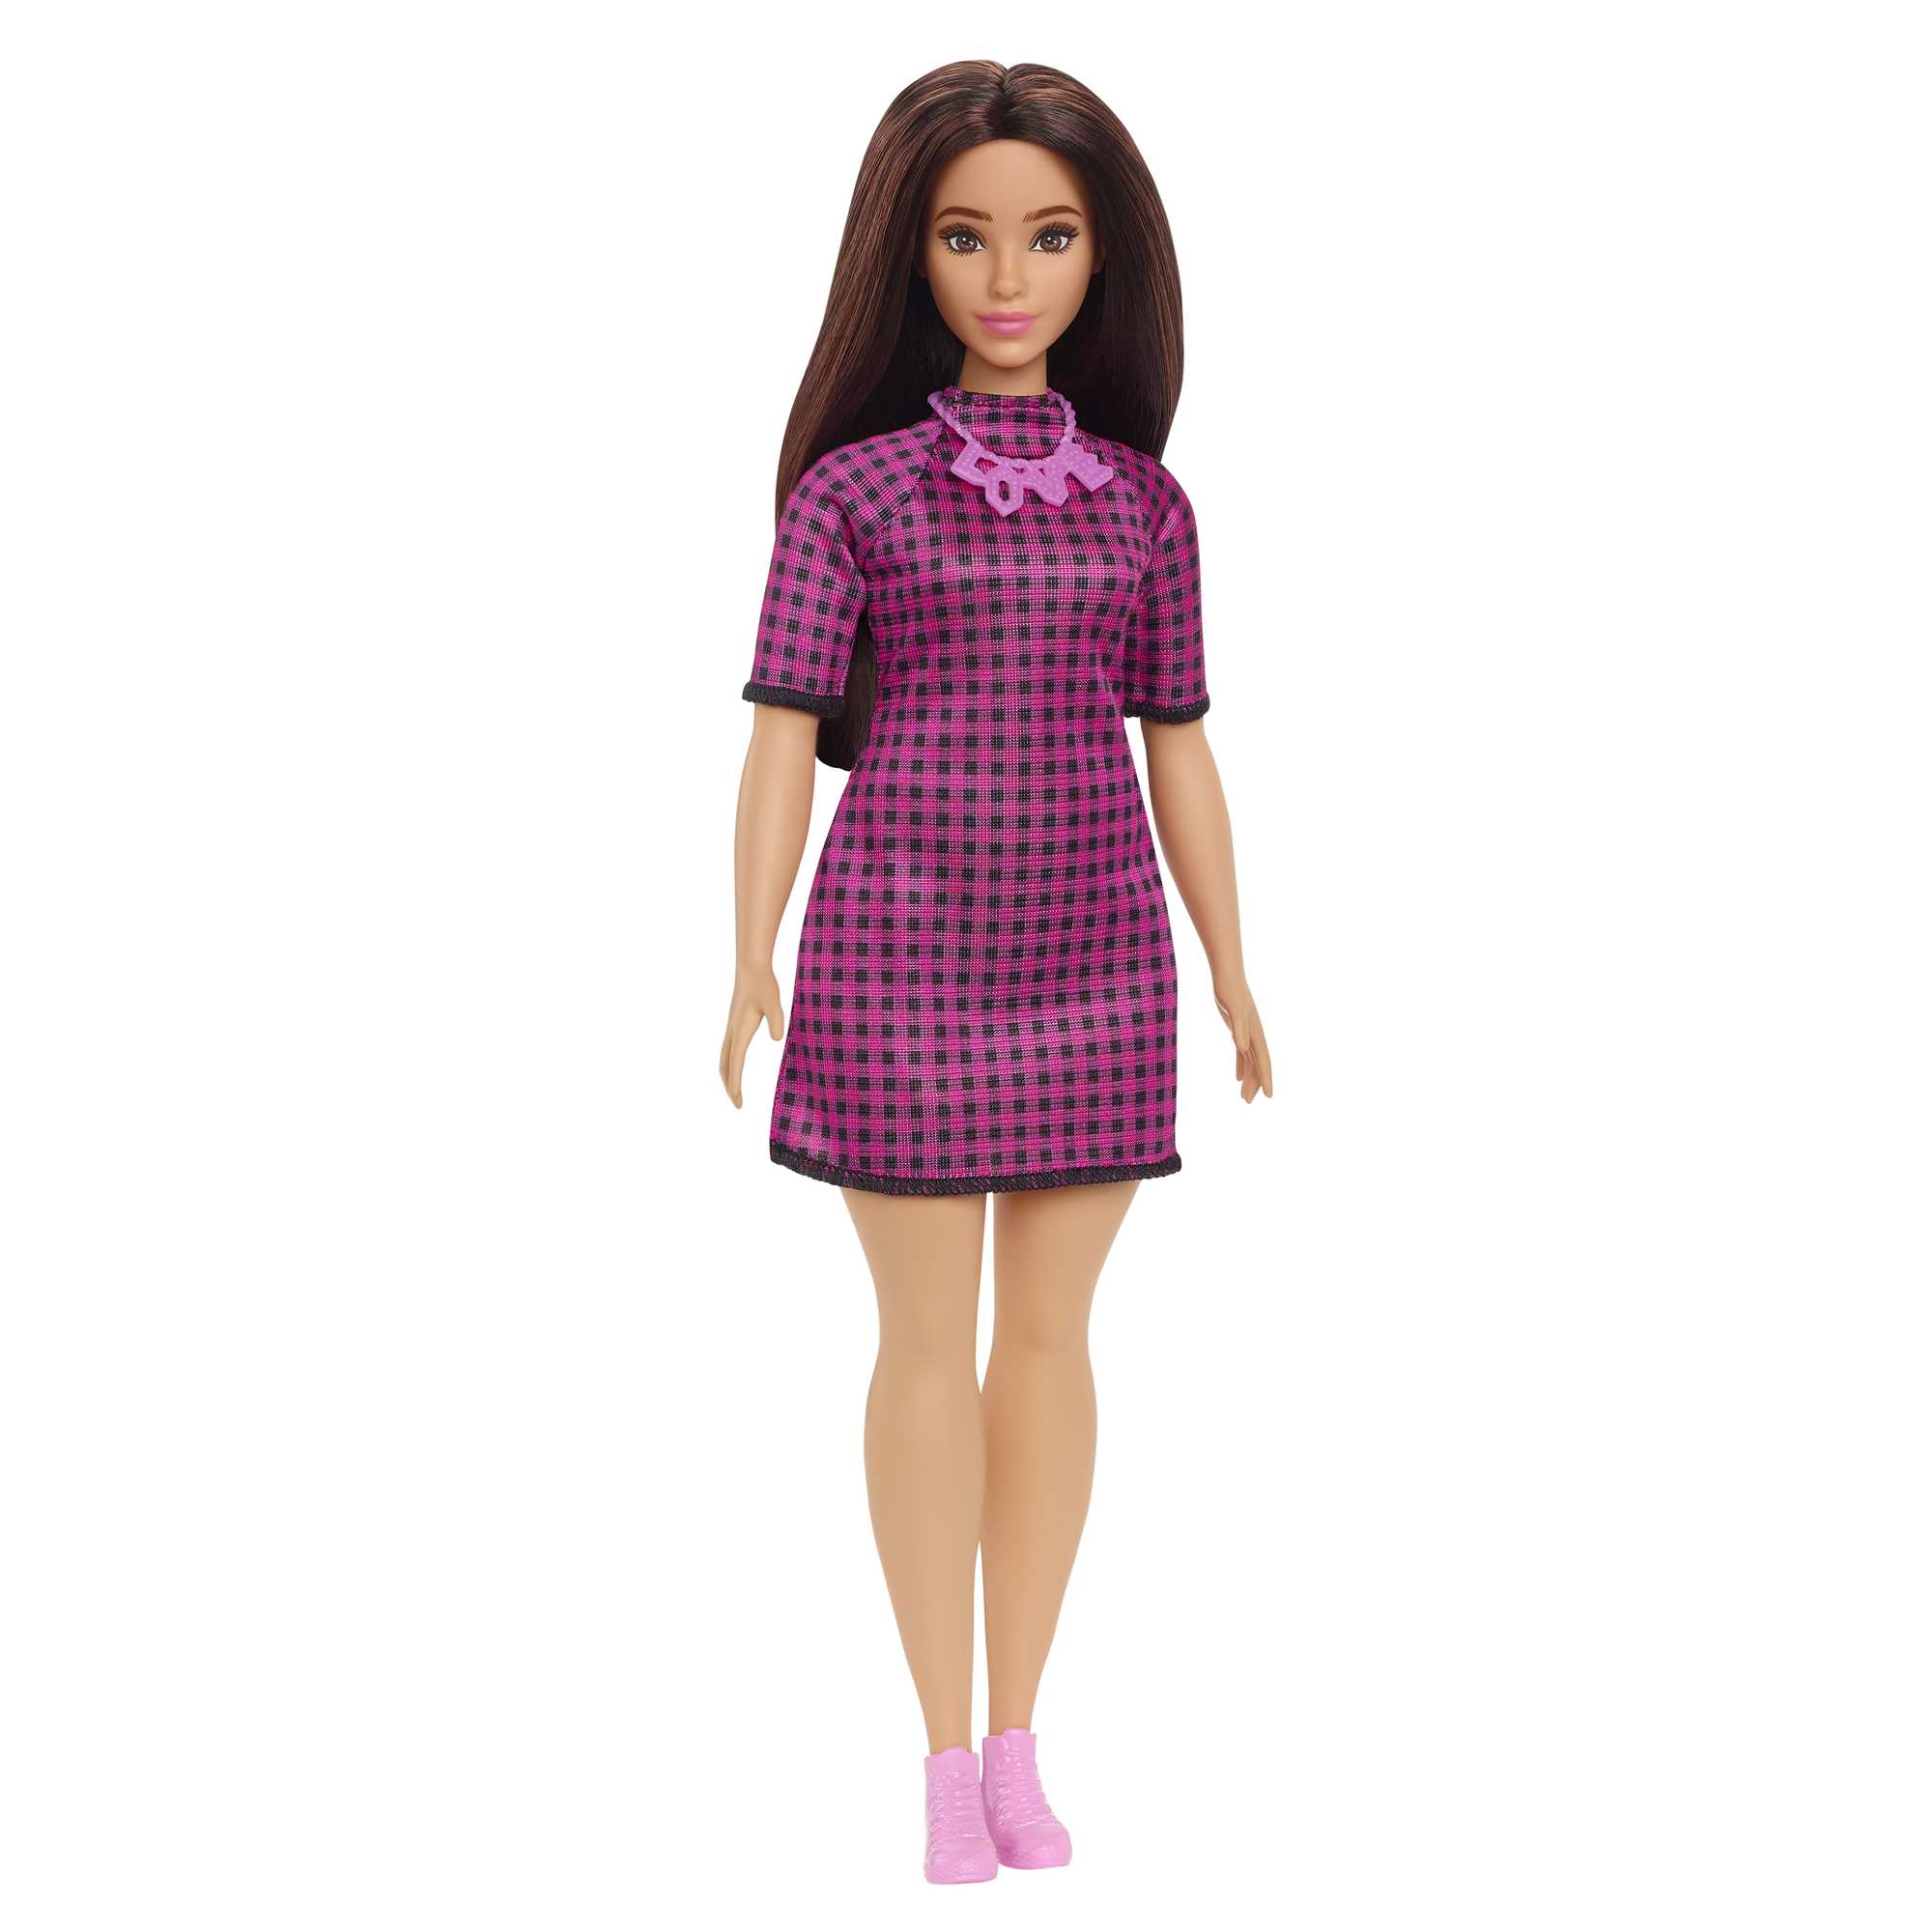 Barbie Fashionistas Doll #188 | Mattel